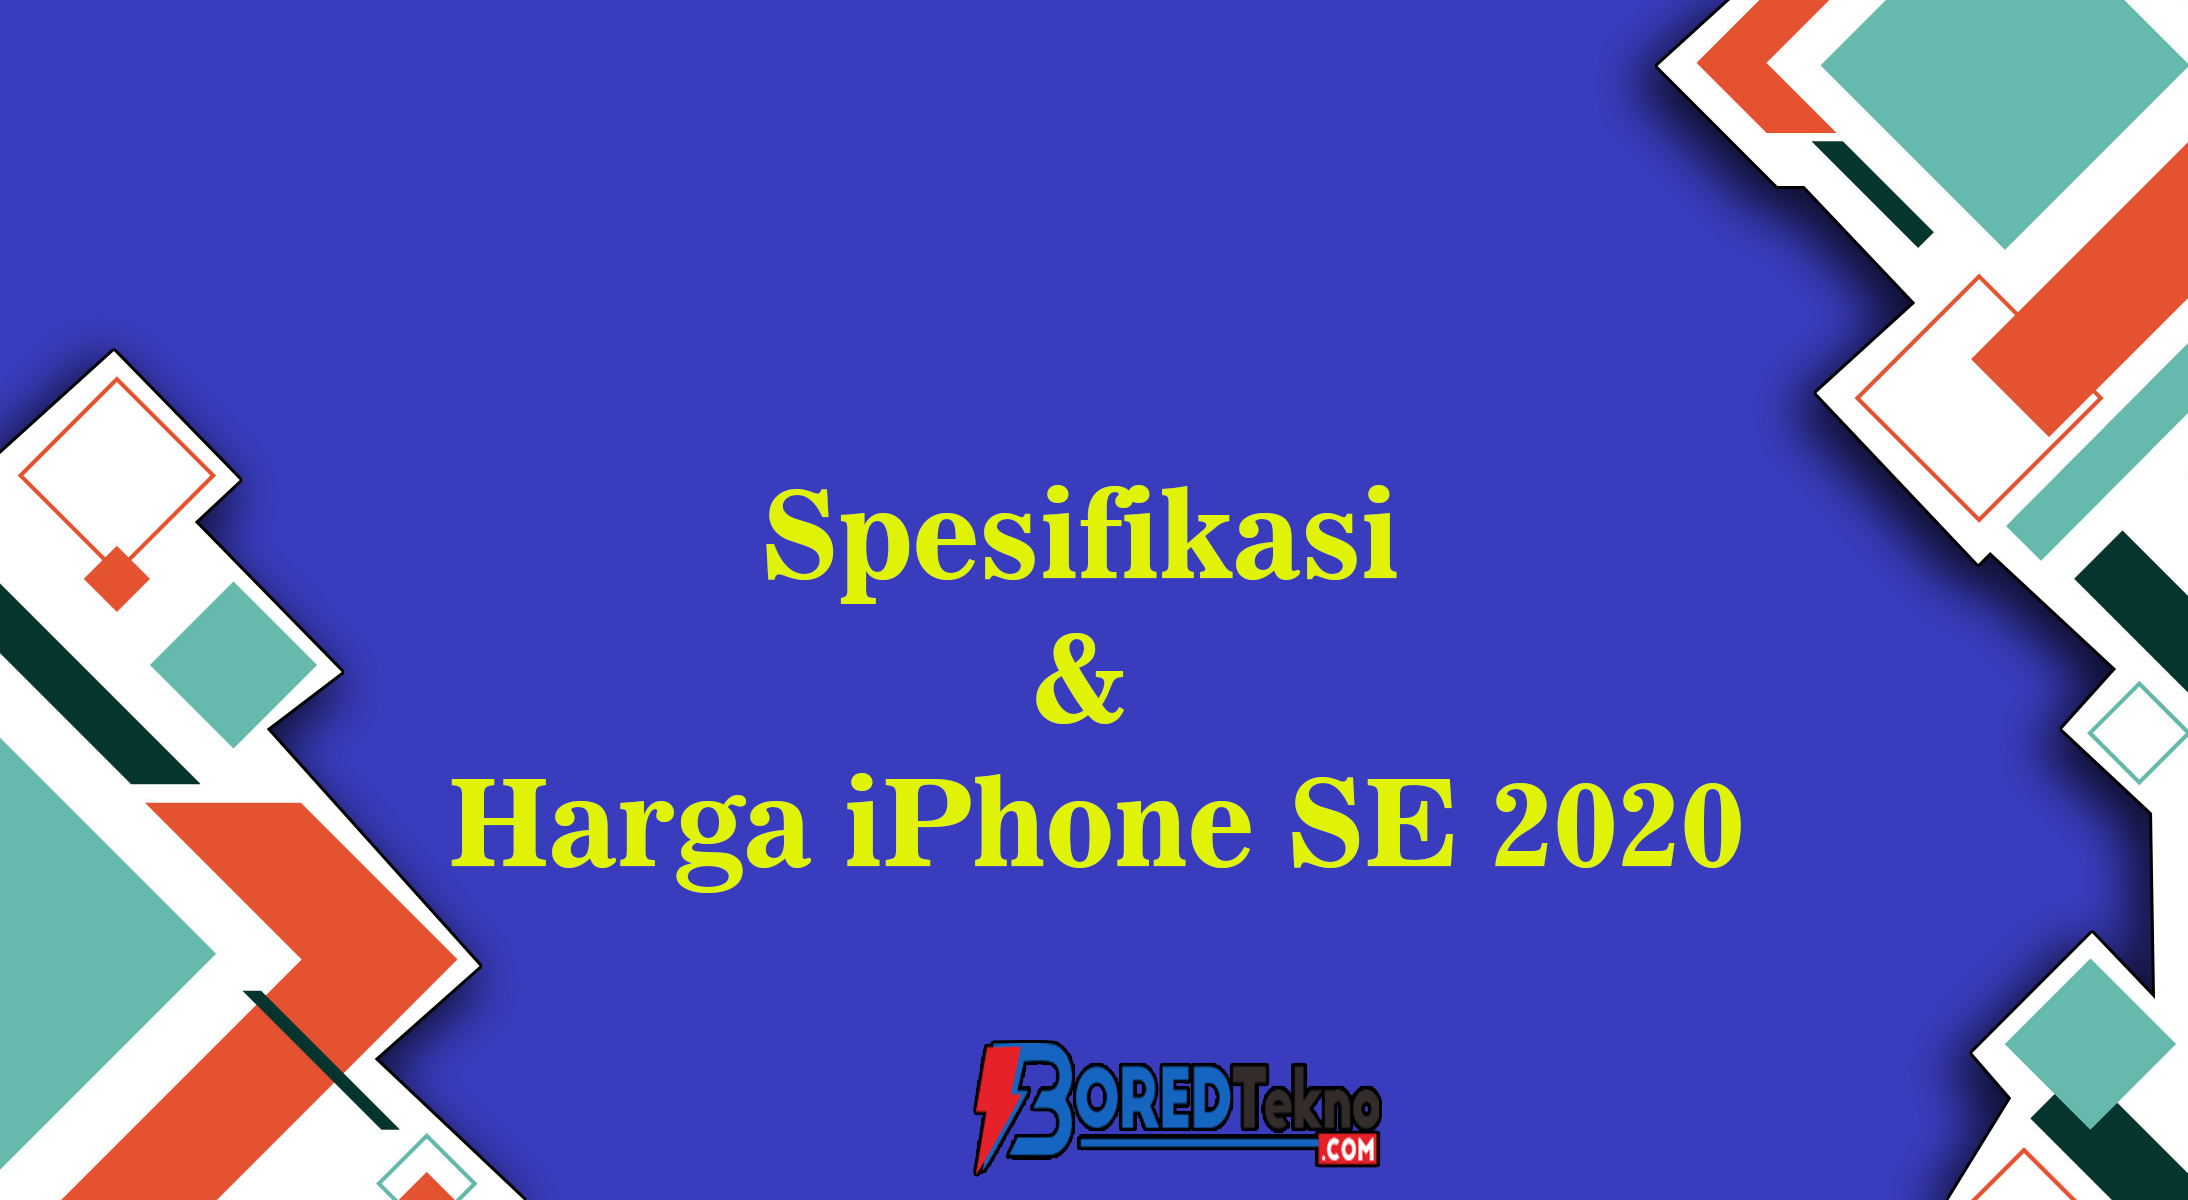 Spesifikasi & Harga iPhone SE 2020